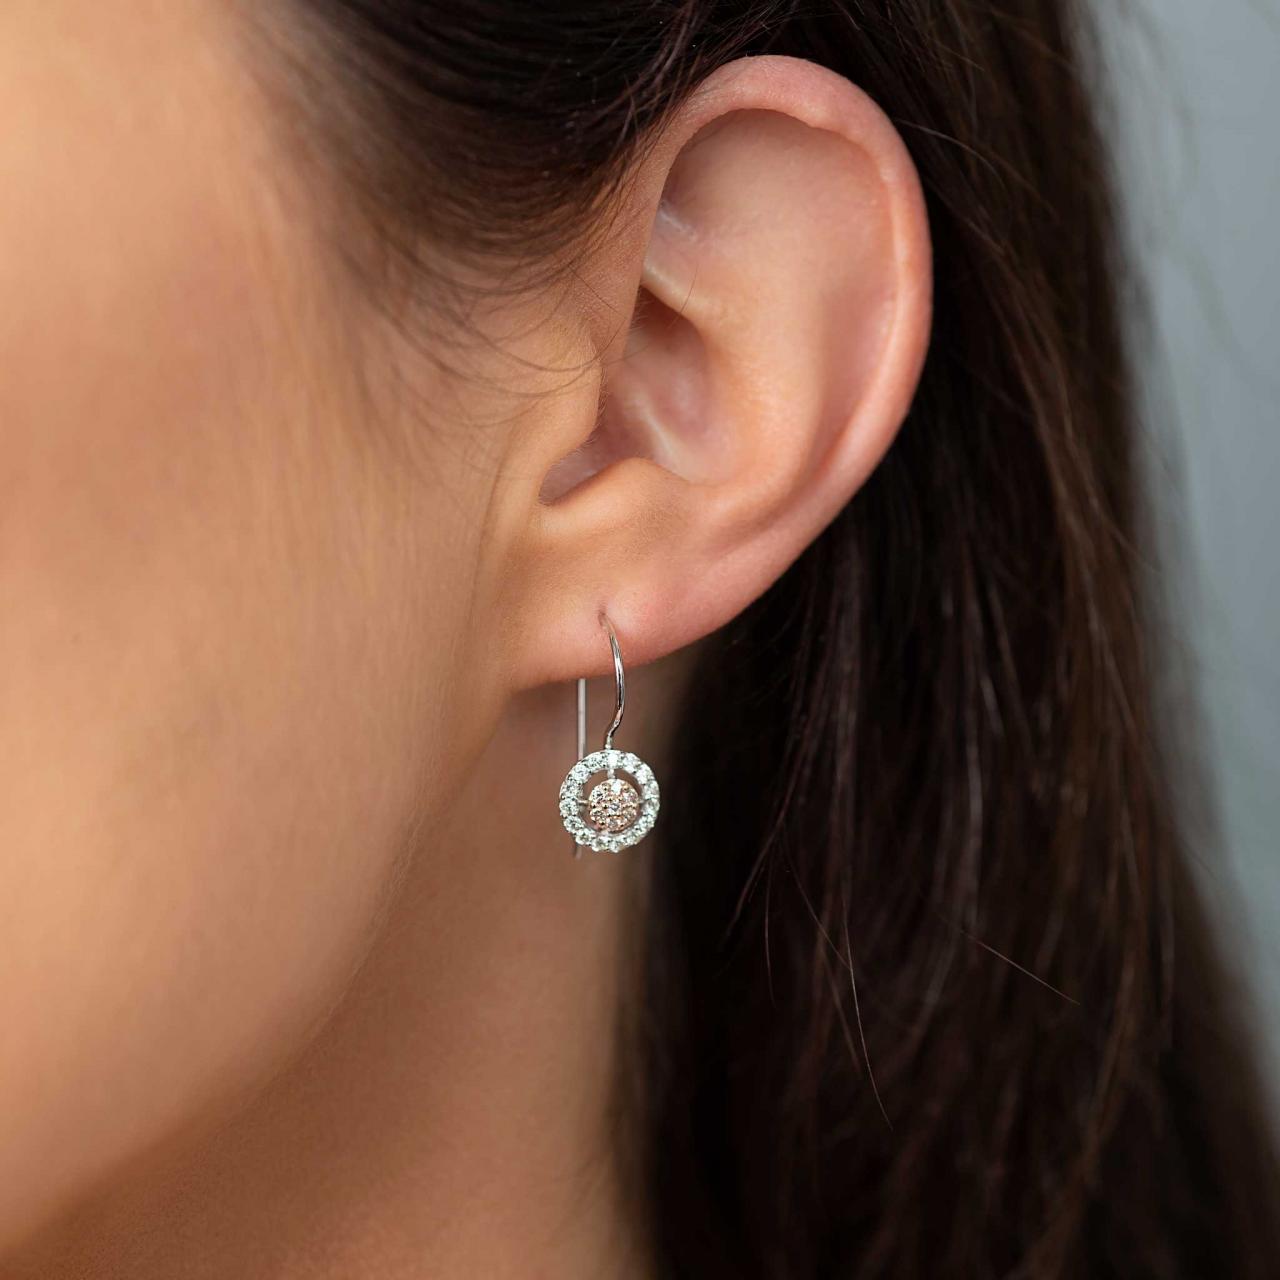 Australian Pink Diamond, Rare White Diamond Cluster Earrings